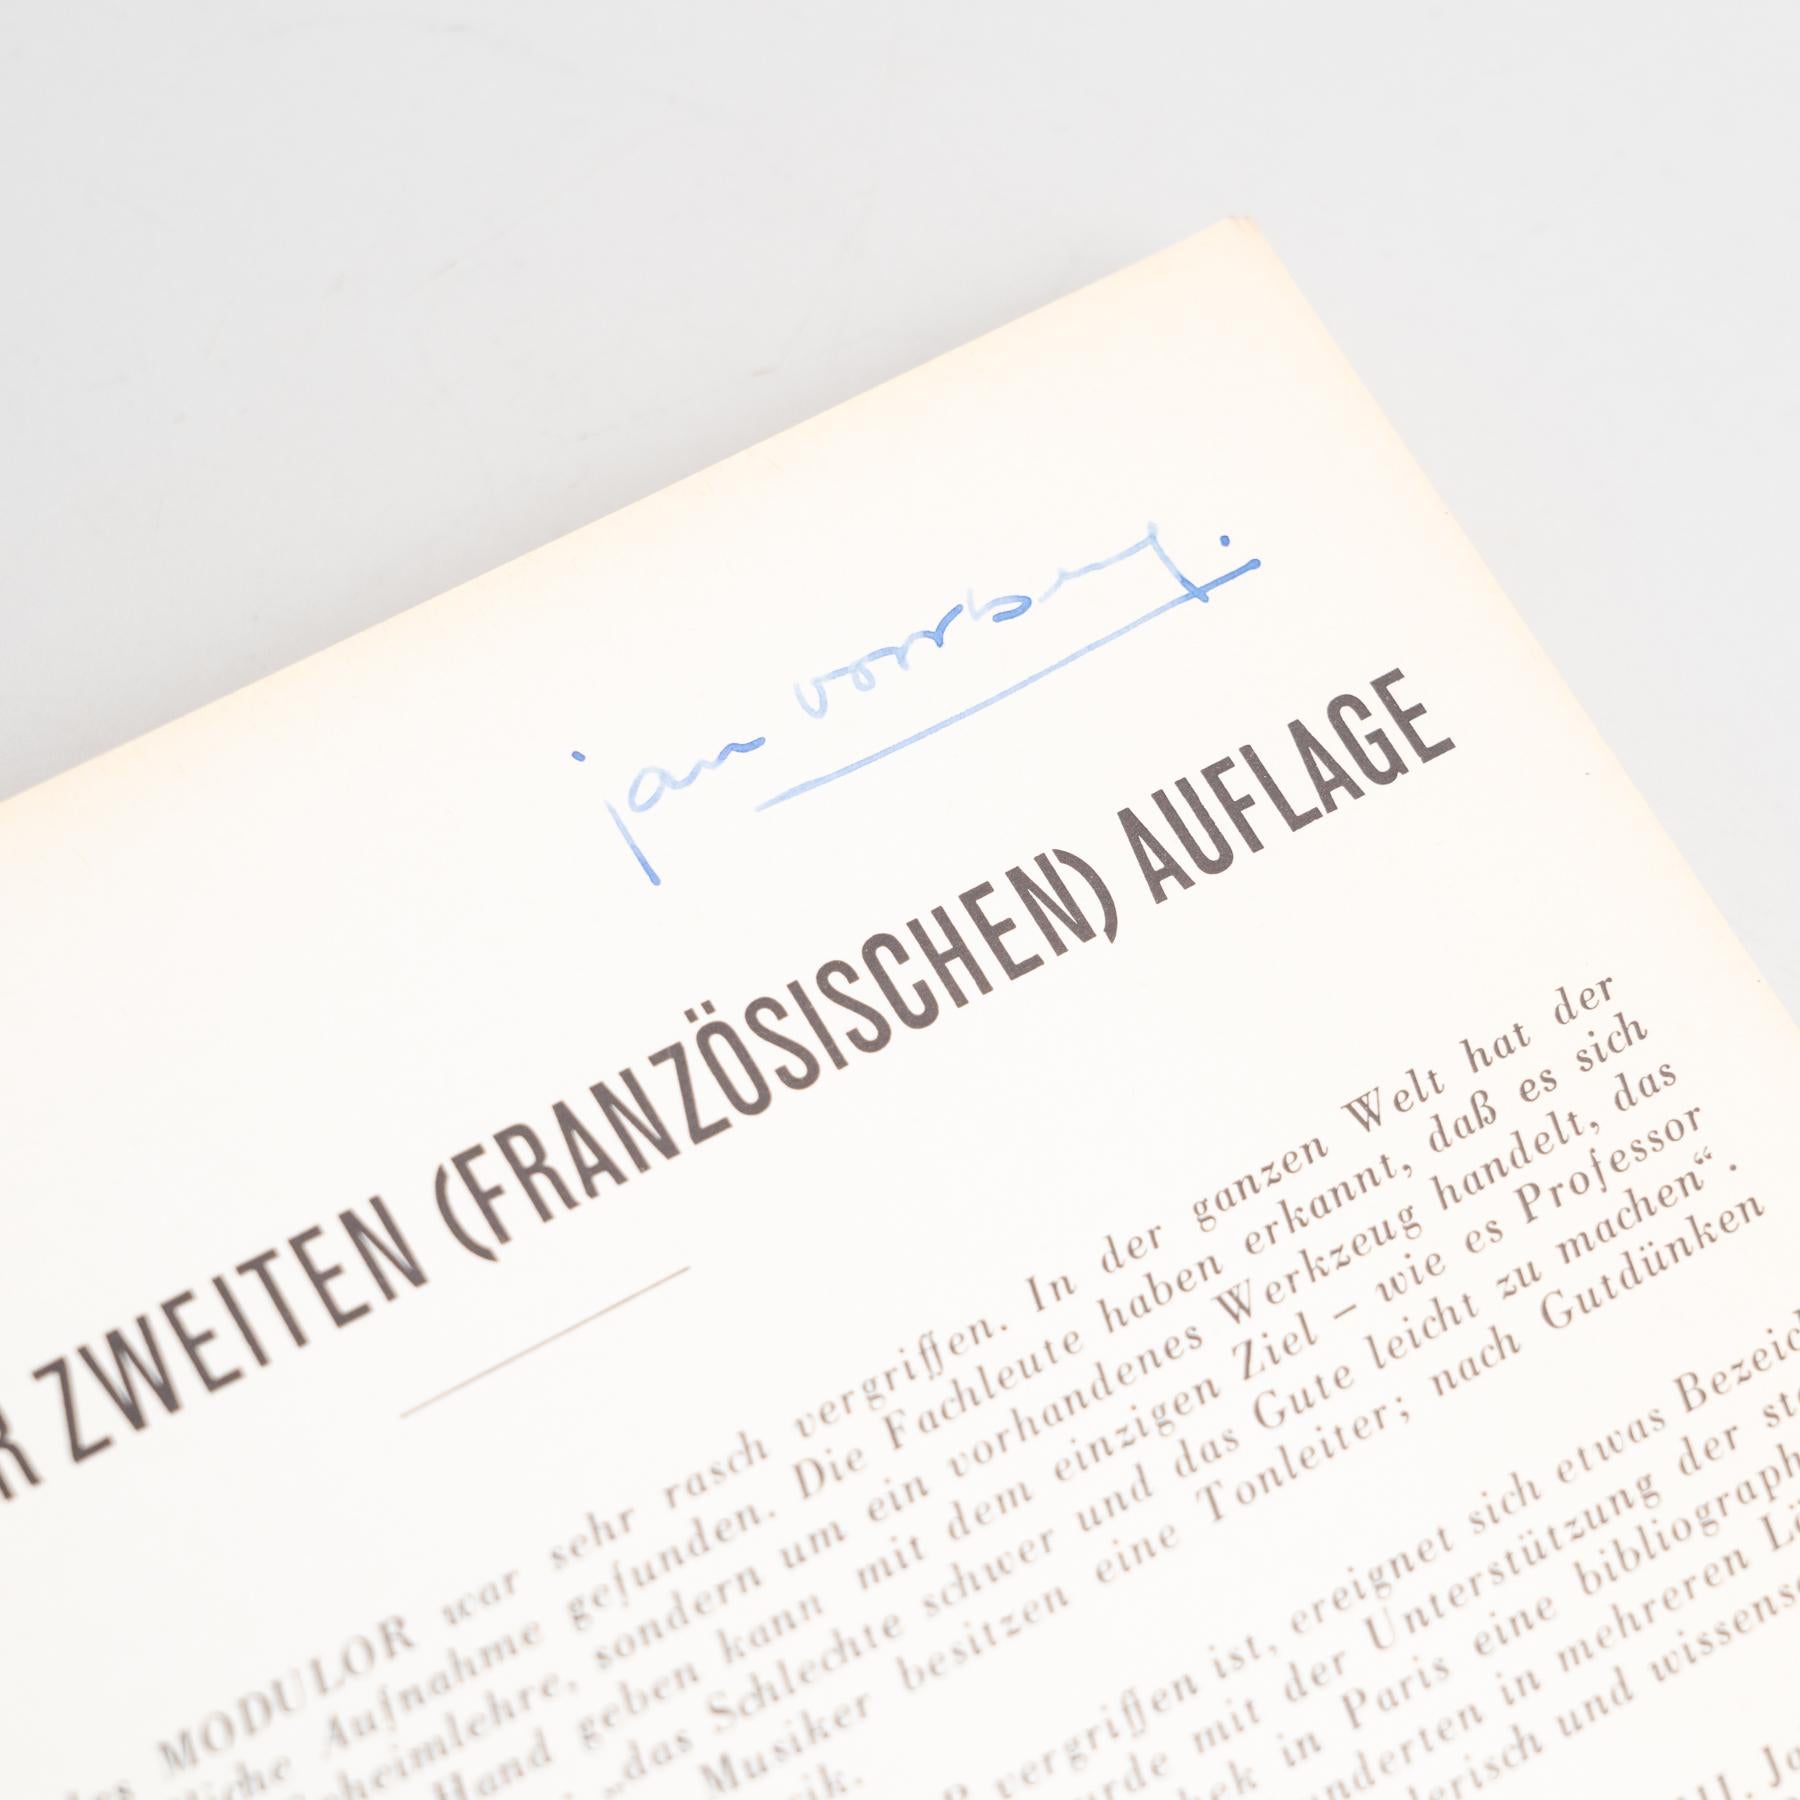 Le Corbusier Der Modulor Book, 1956 For Sale 4